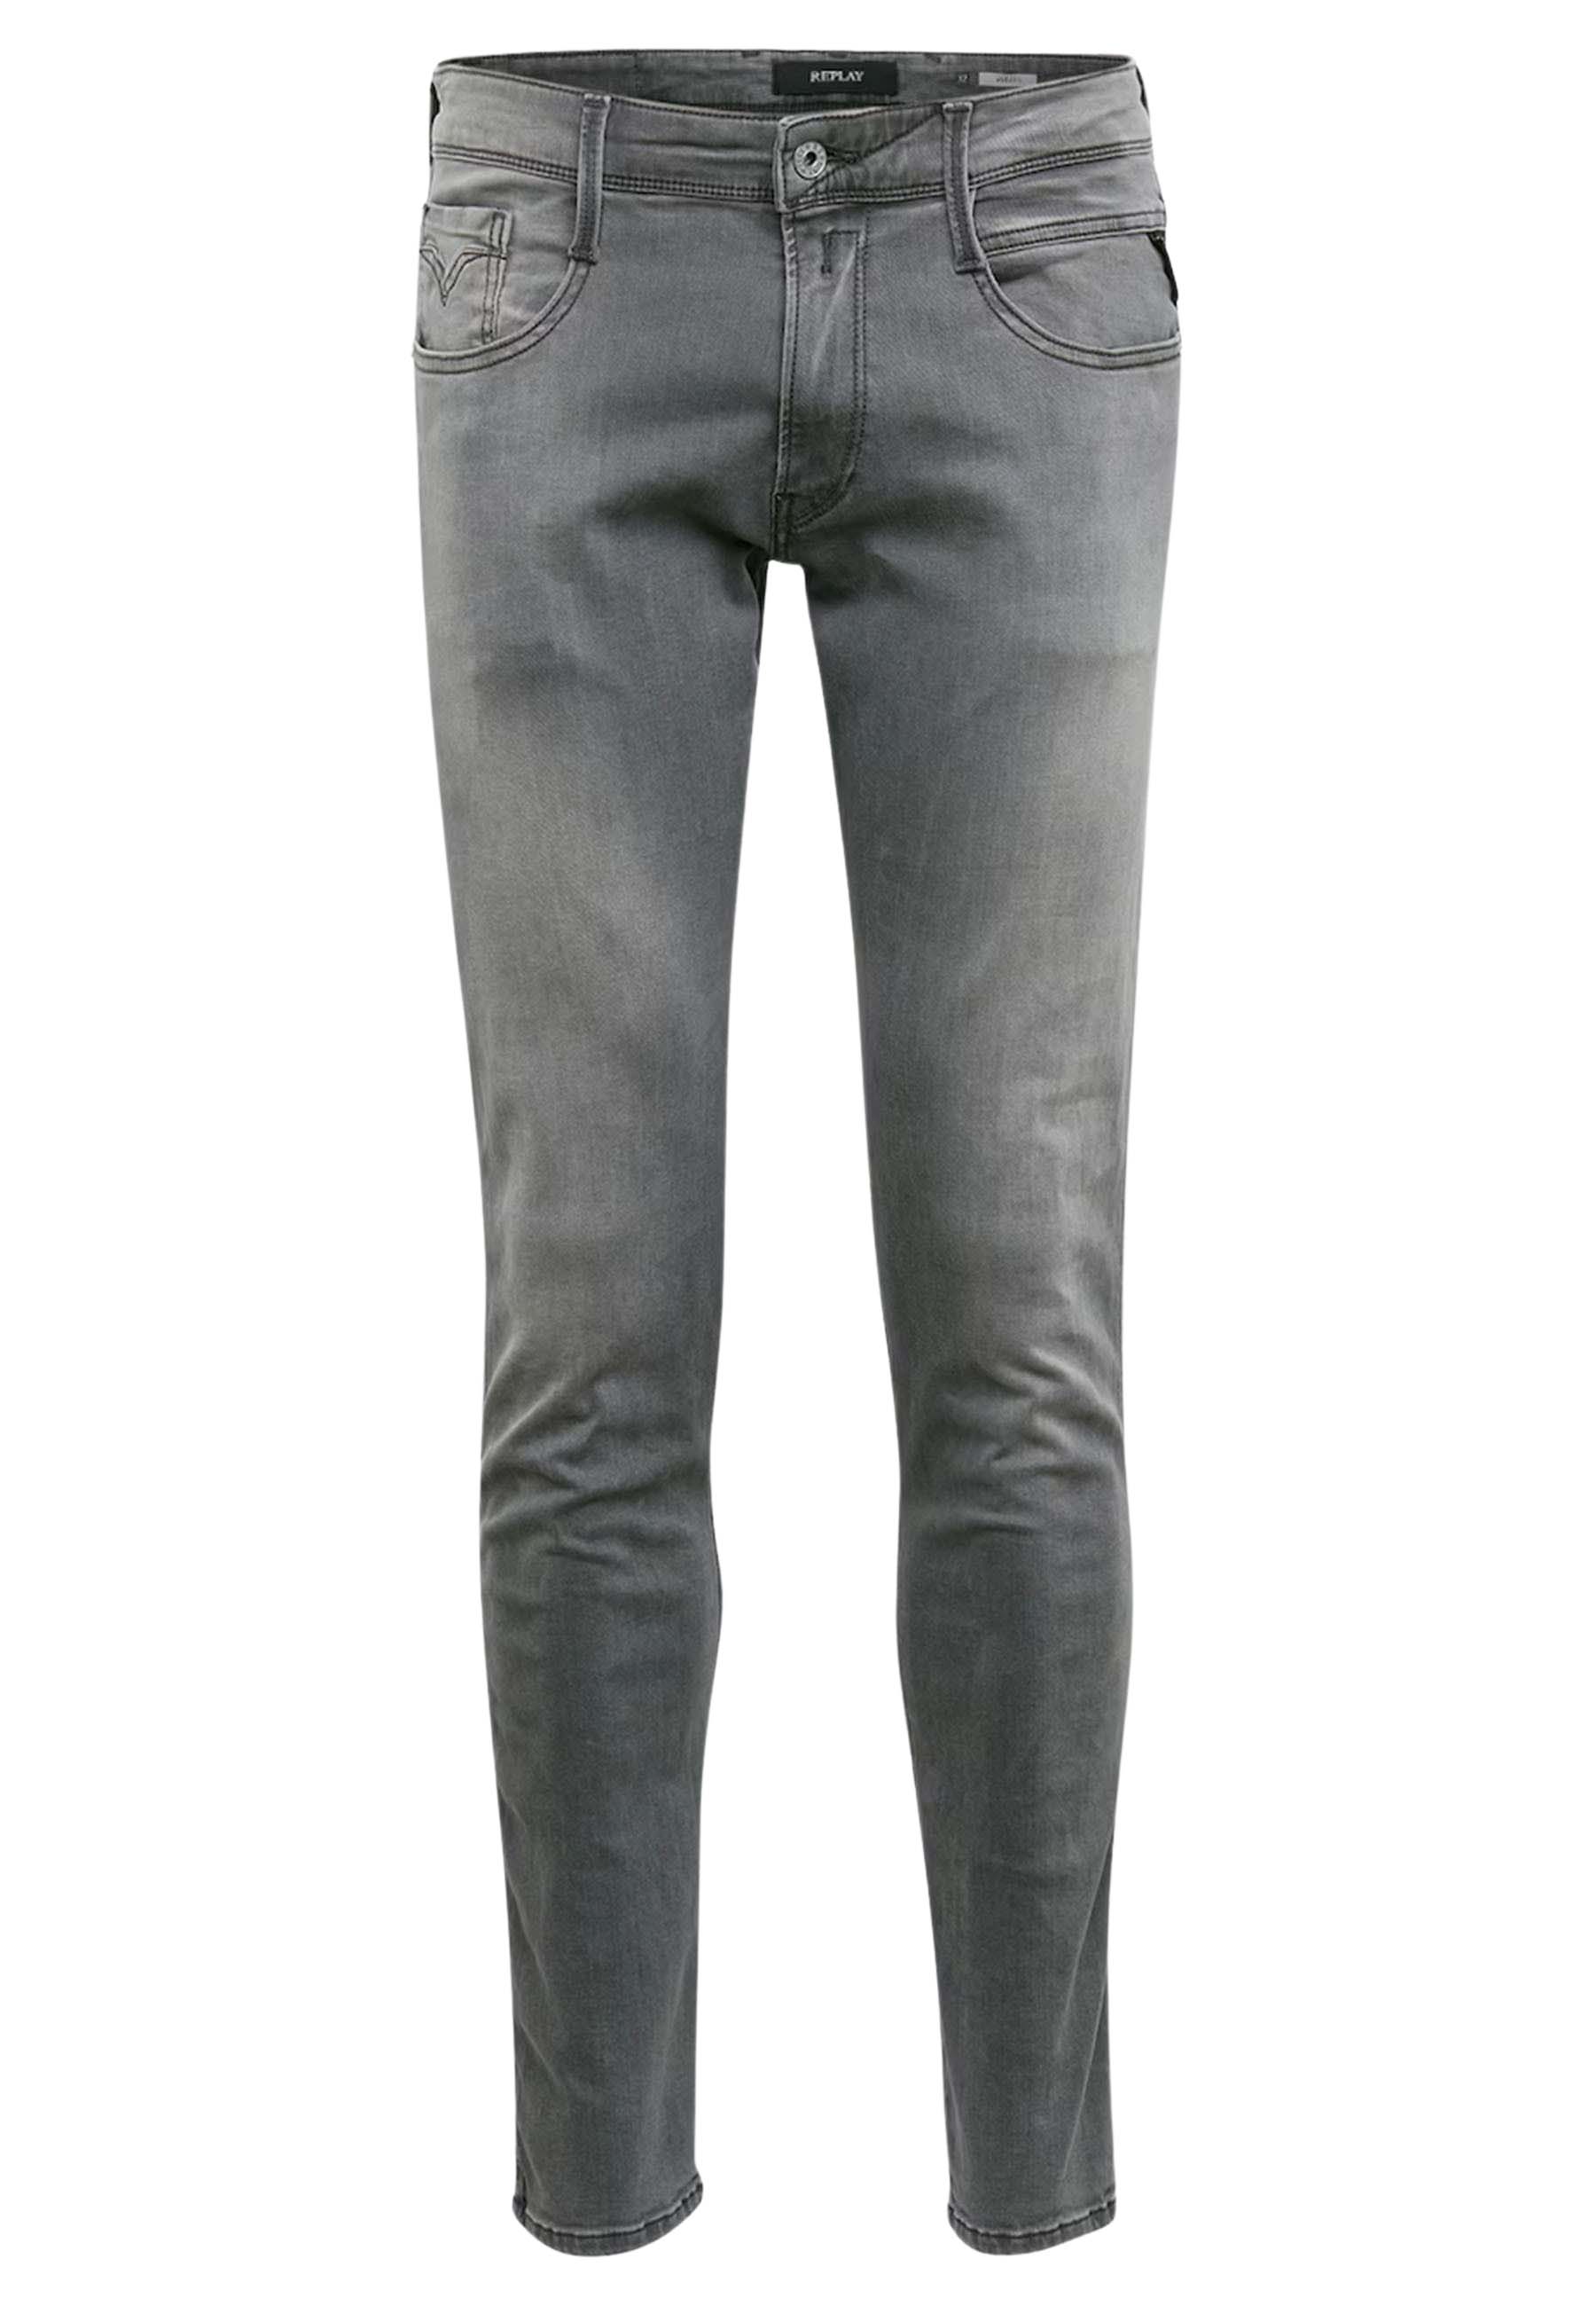 Replay Anbass jeans grijs Heren maat 29/32